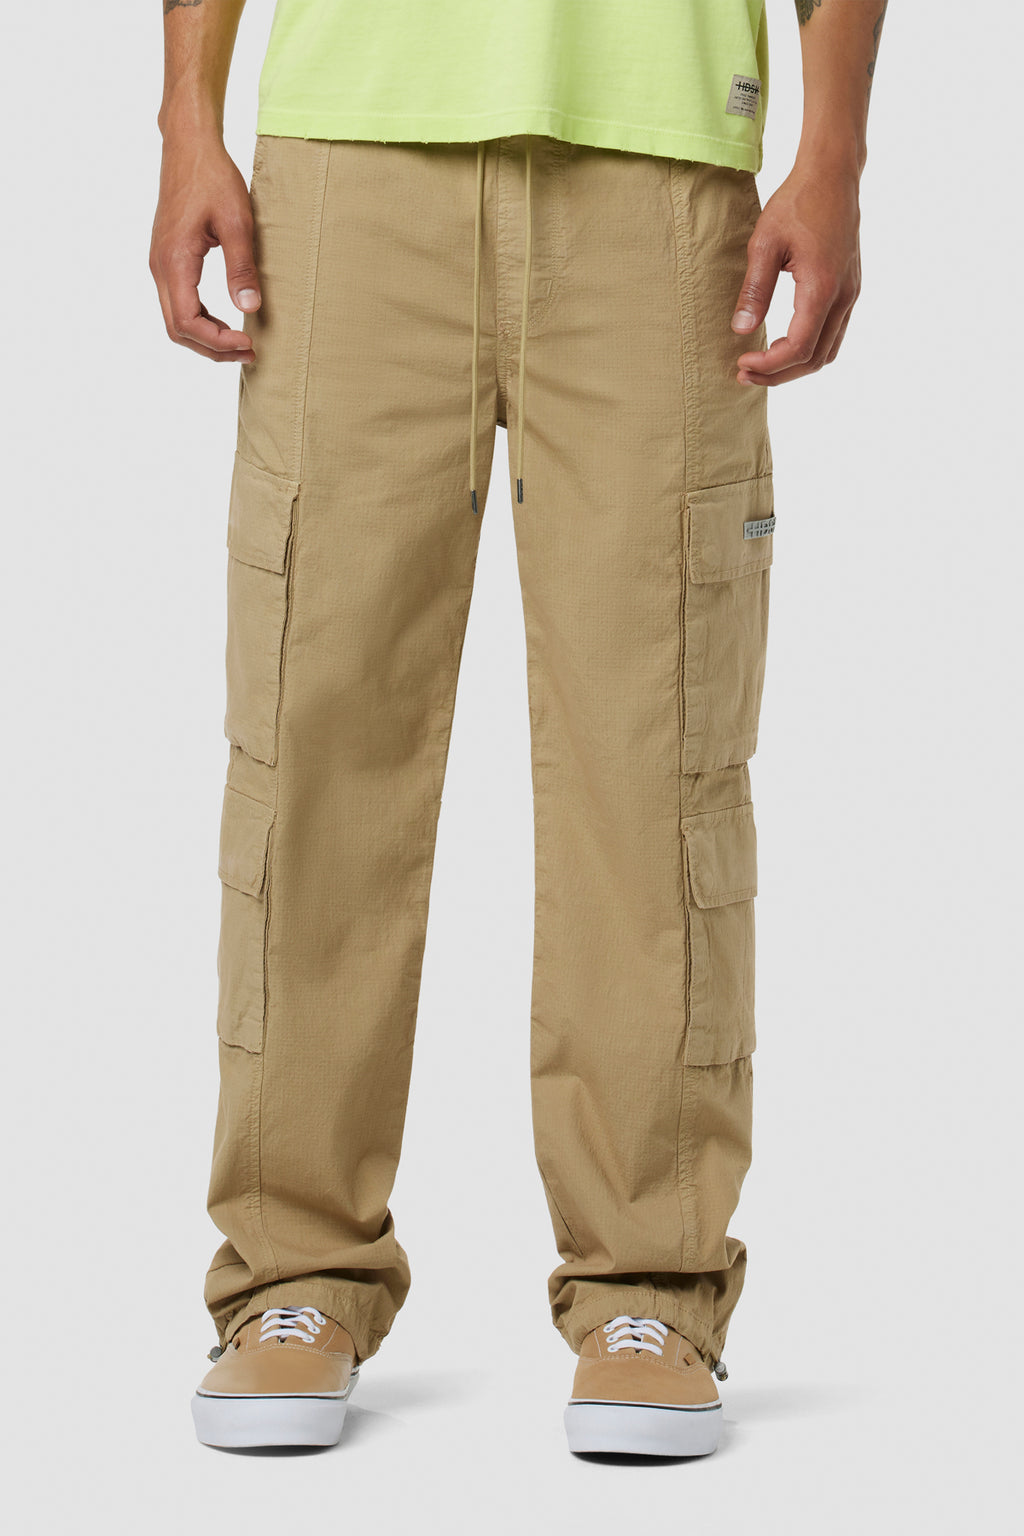 Shop Men's Pants at Hudson Jeans | Hudson Jeans